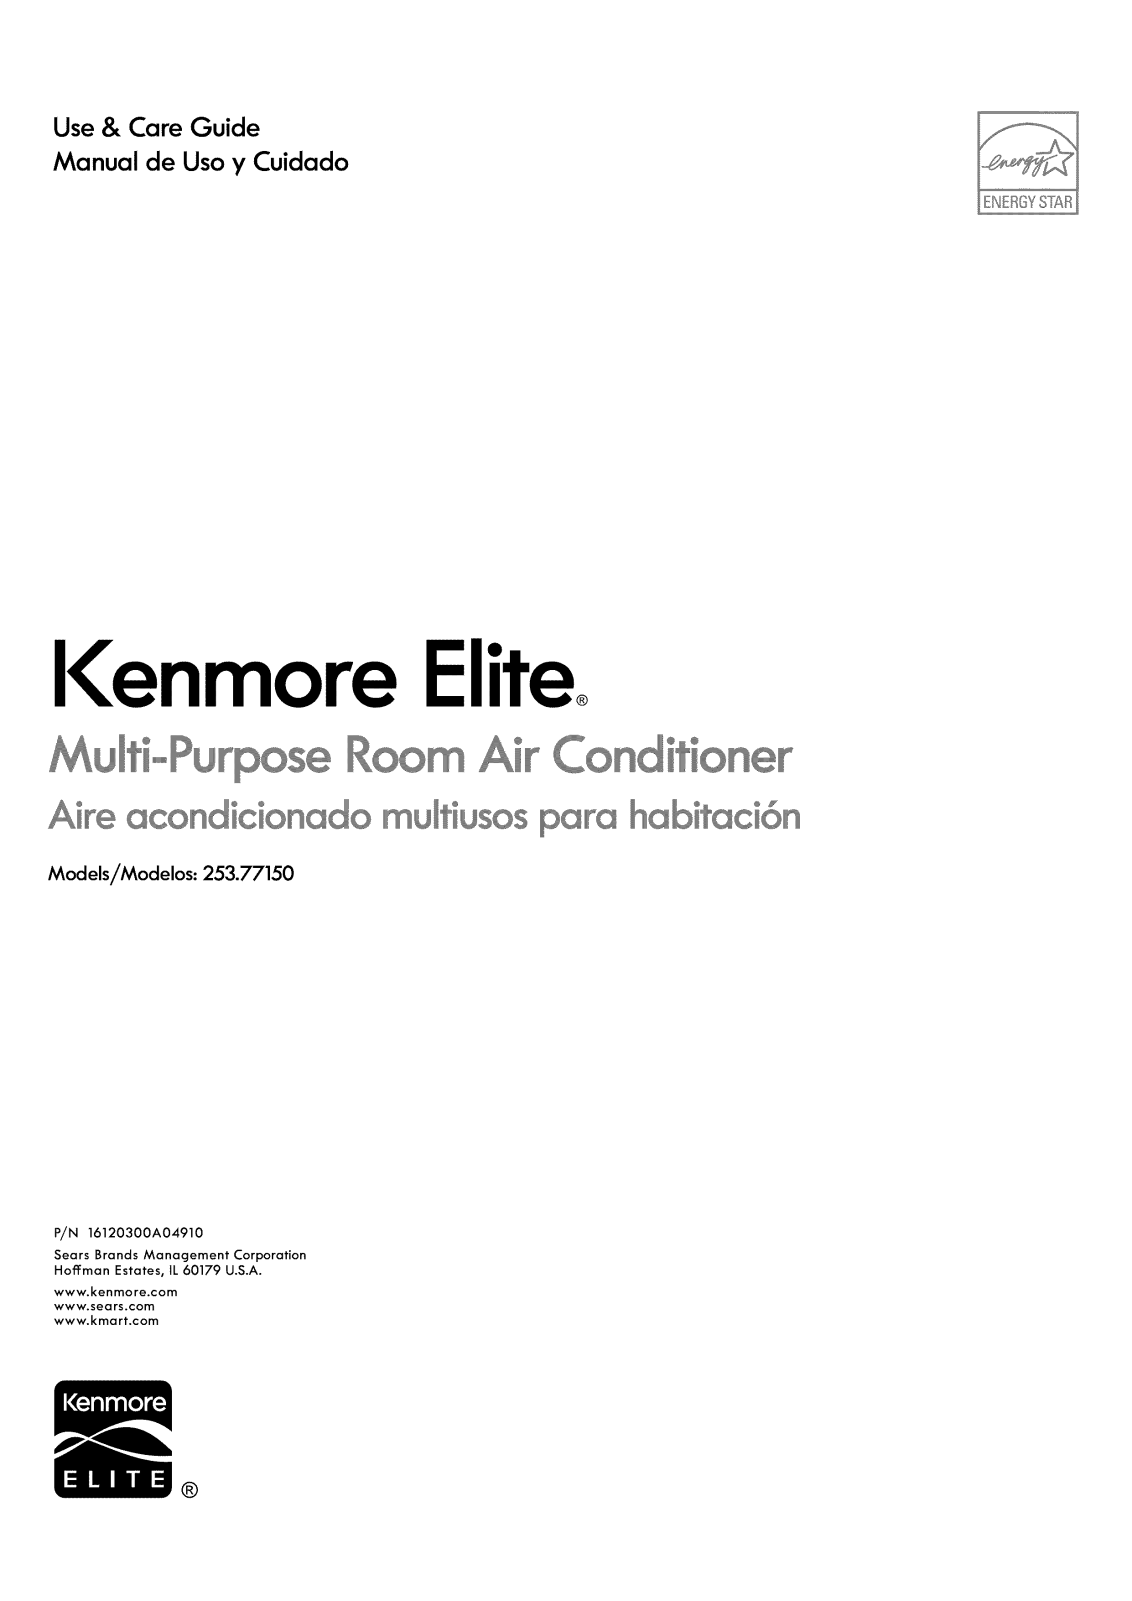 Kenmore Elite 25377150610 Owner’s Manual